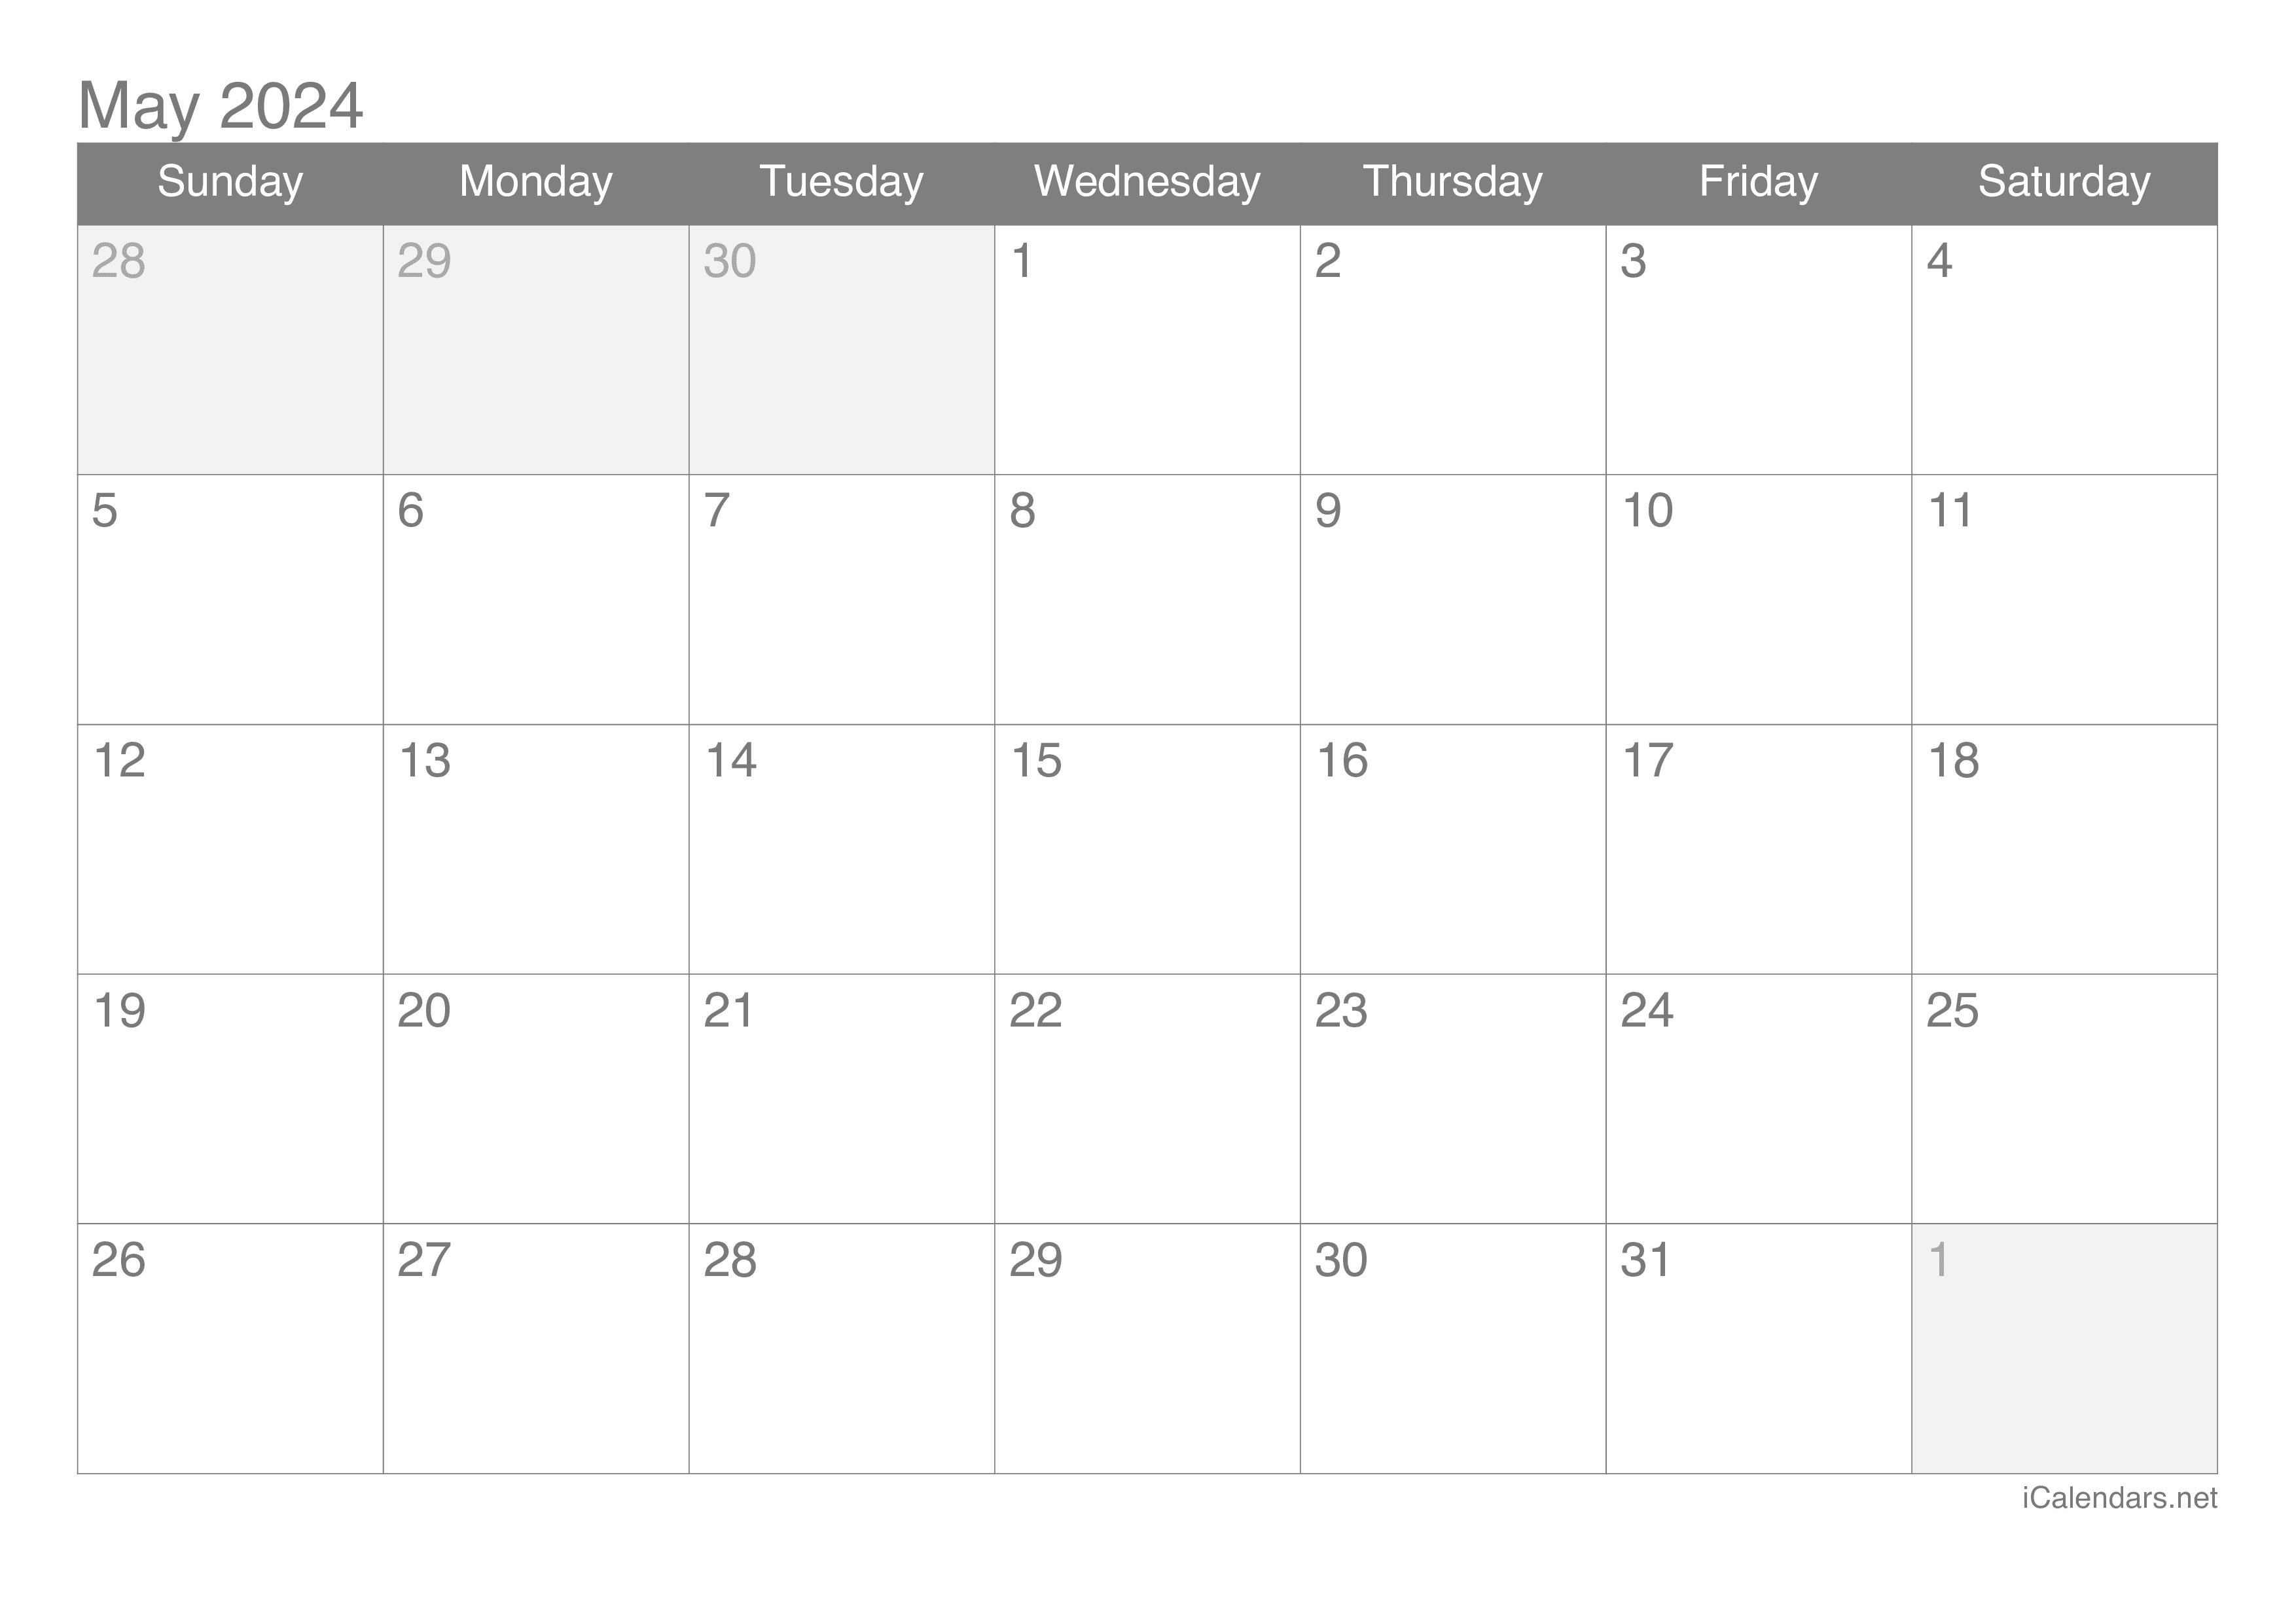 May 2024 Printable Calendar icalendars net